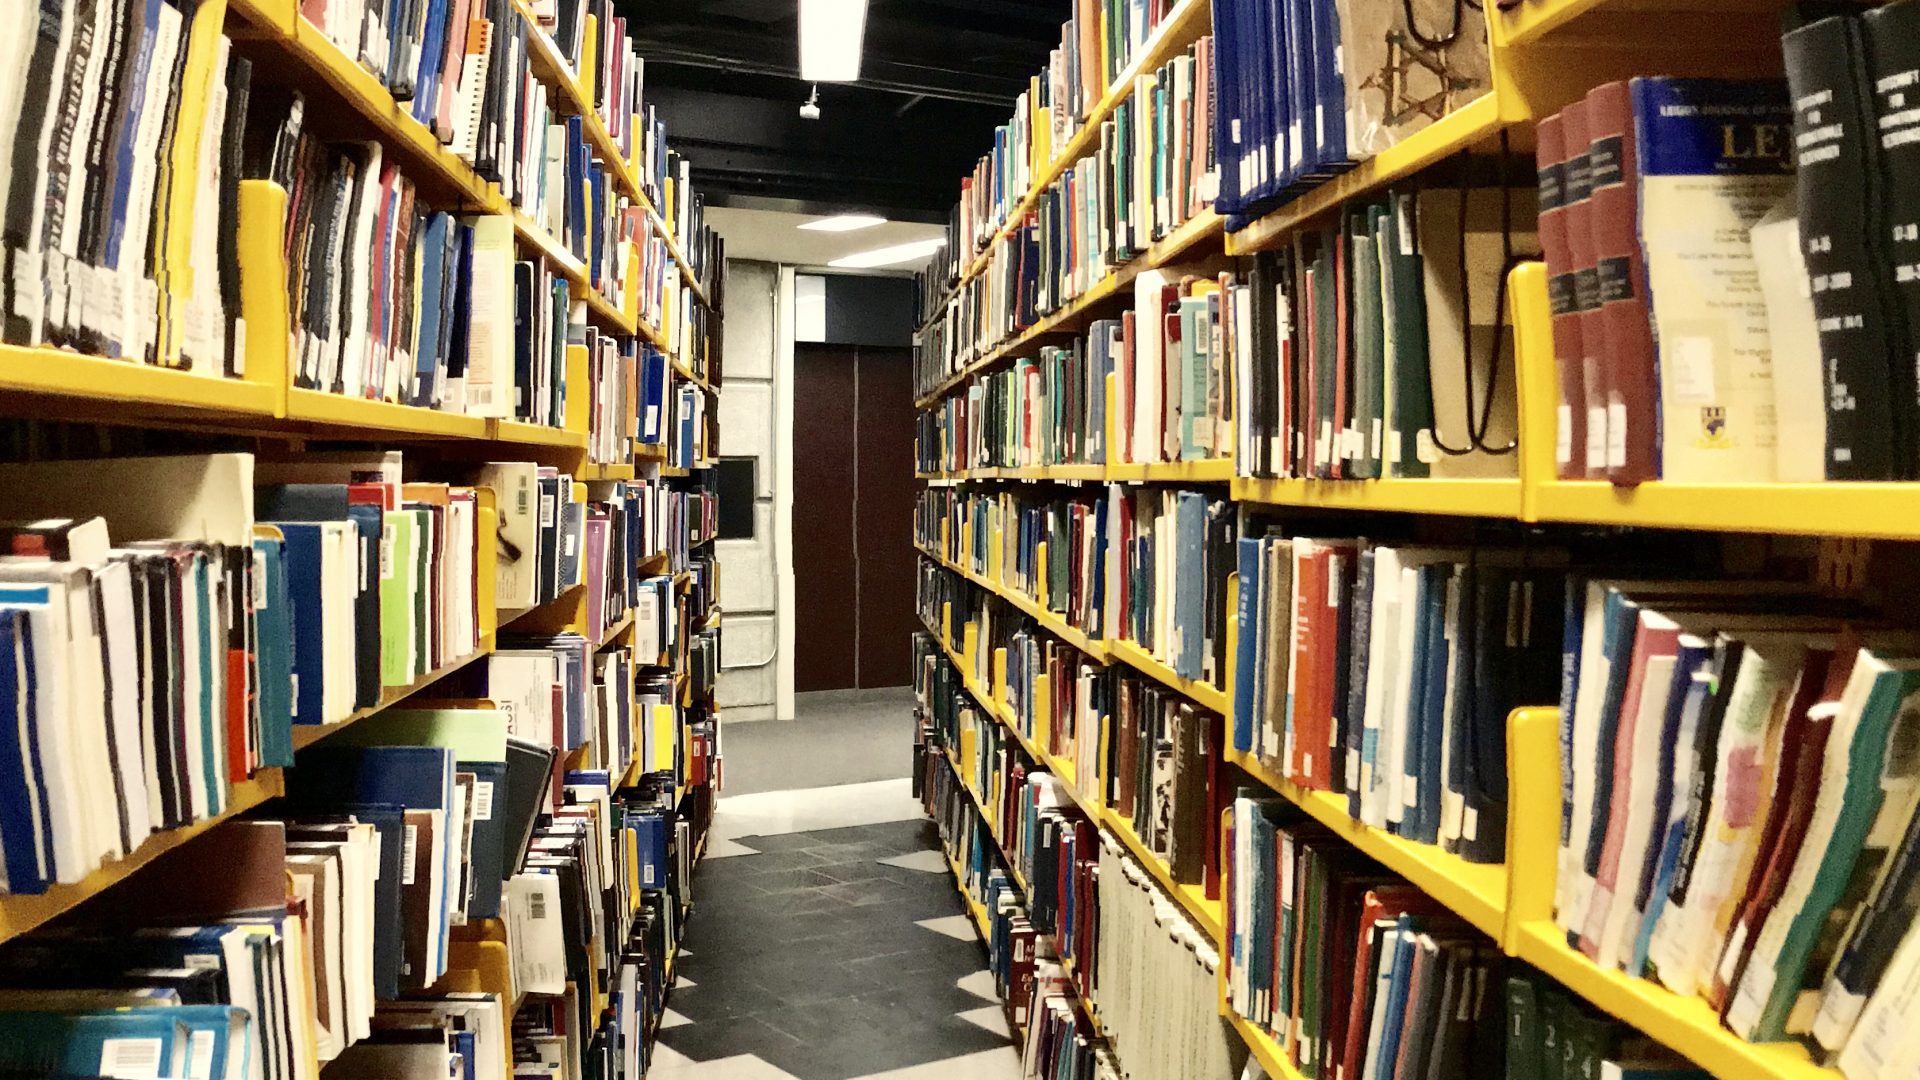 A photo of a bookshelf at Robarts.